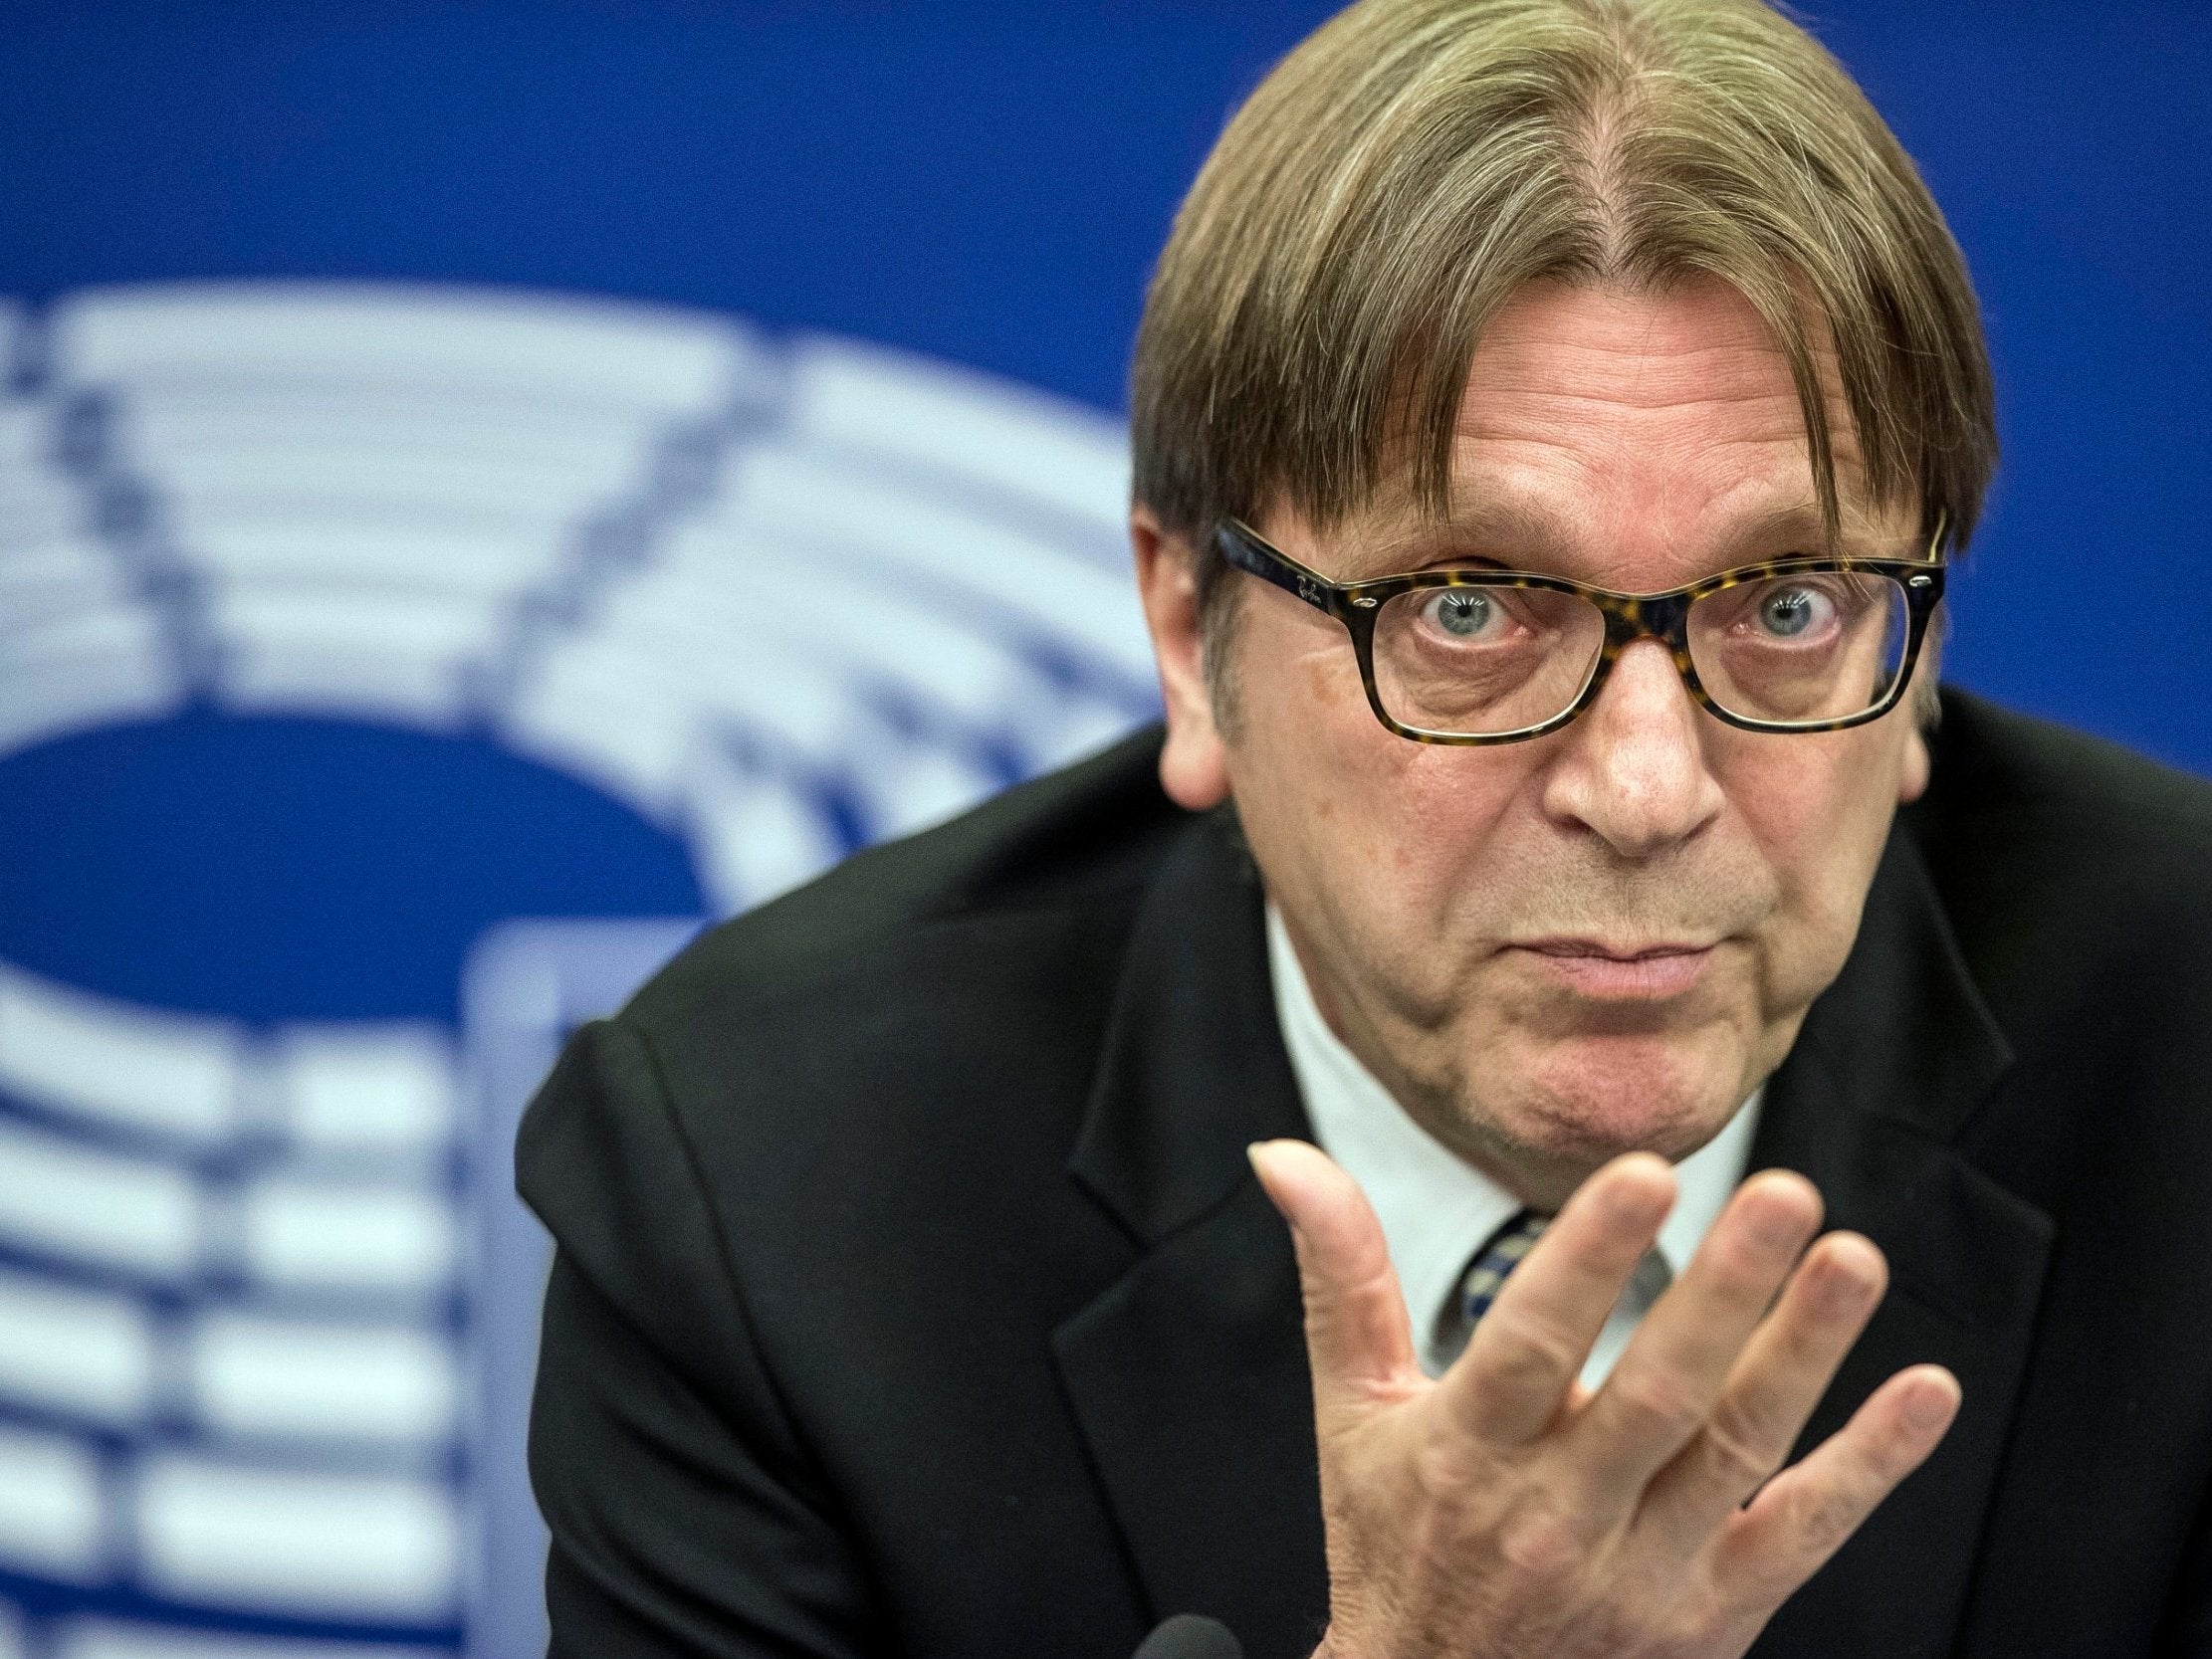 Guy Verhofstadt is against a longer extension